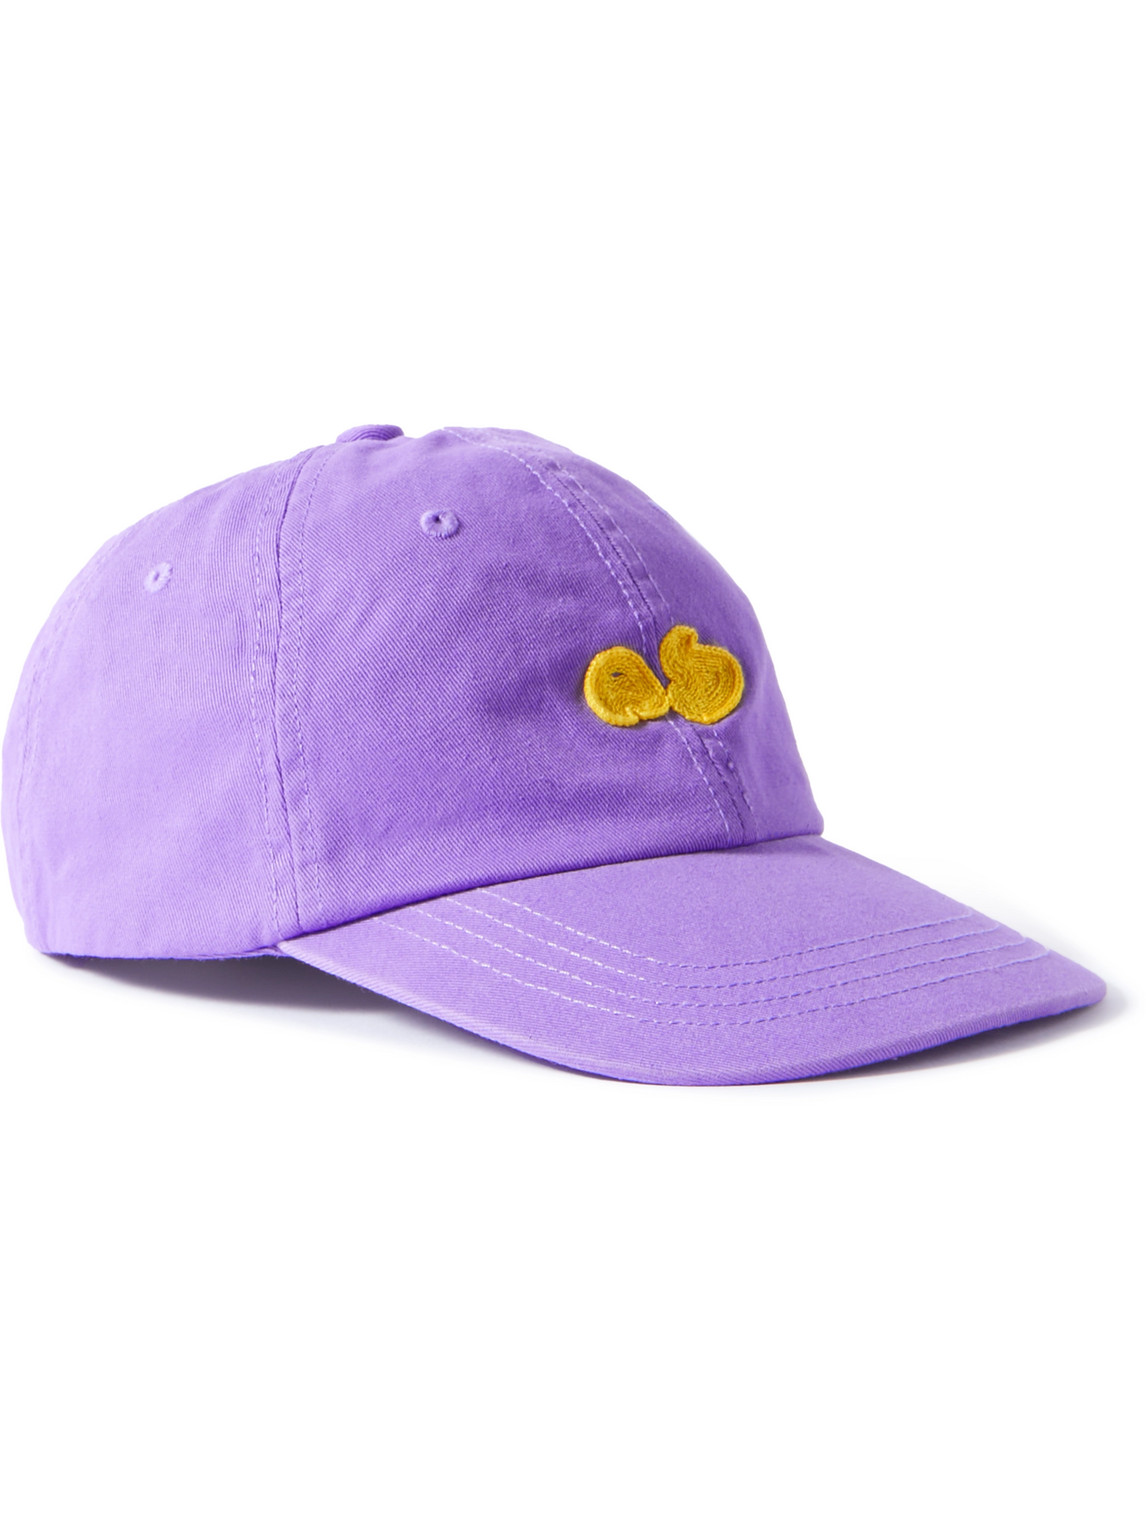 Acne Studios - Logo-Appliquéd Garment-Dyed Cotton Baseball Cap - Men - Purple - one size